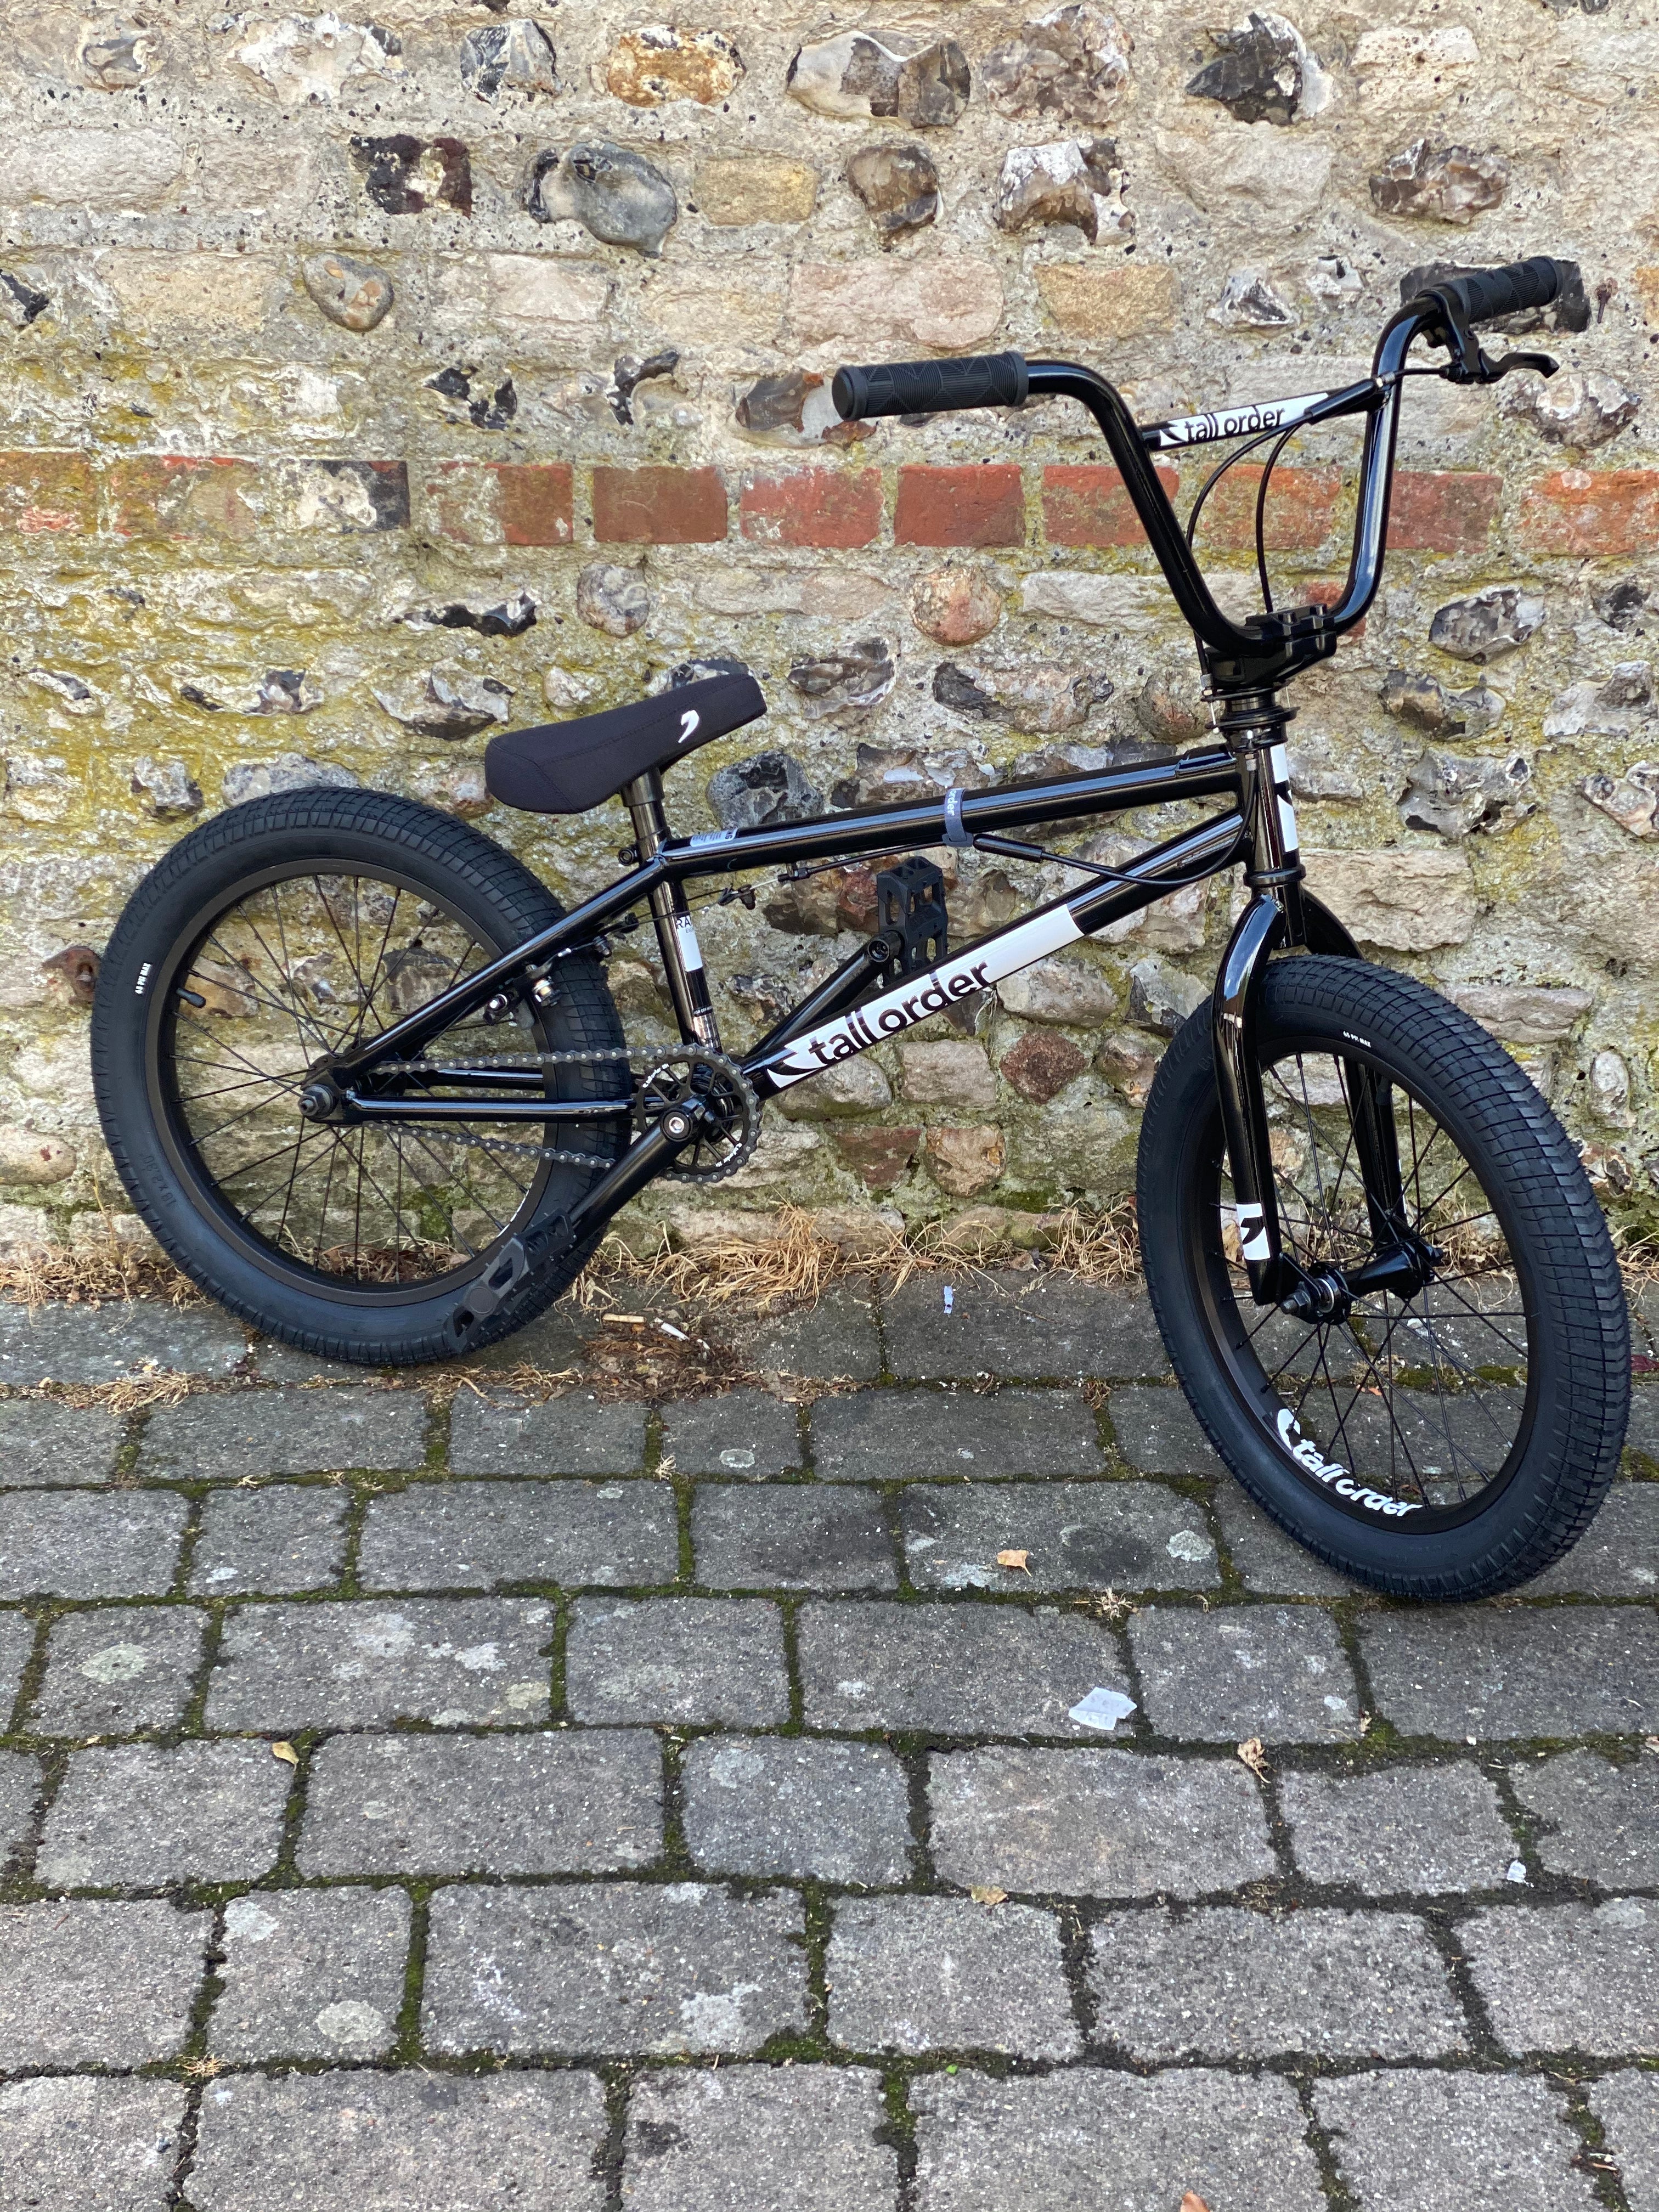 Tall Order Ramp 18” BMX complete bike